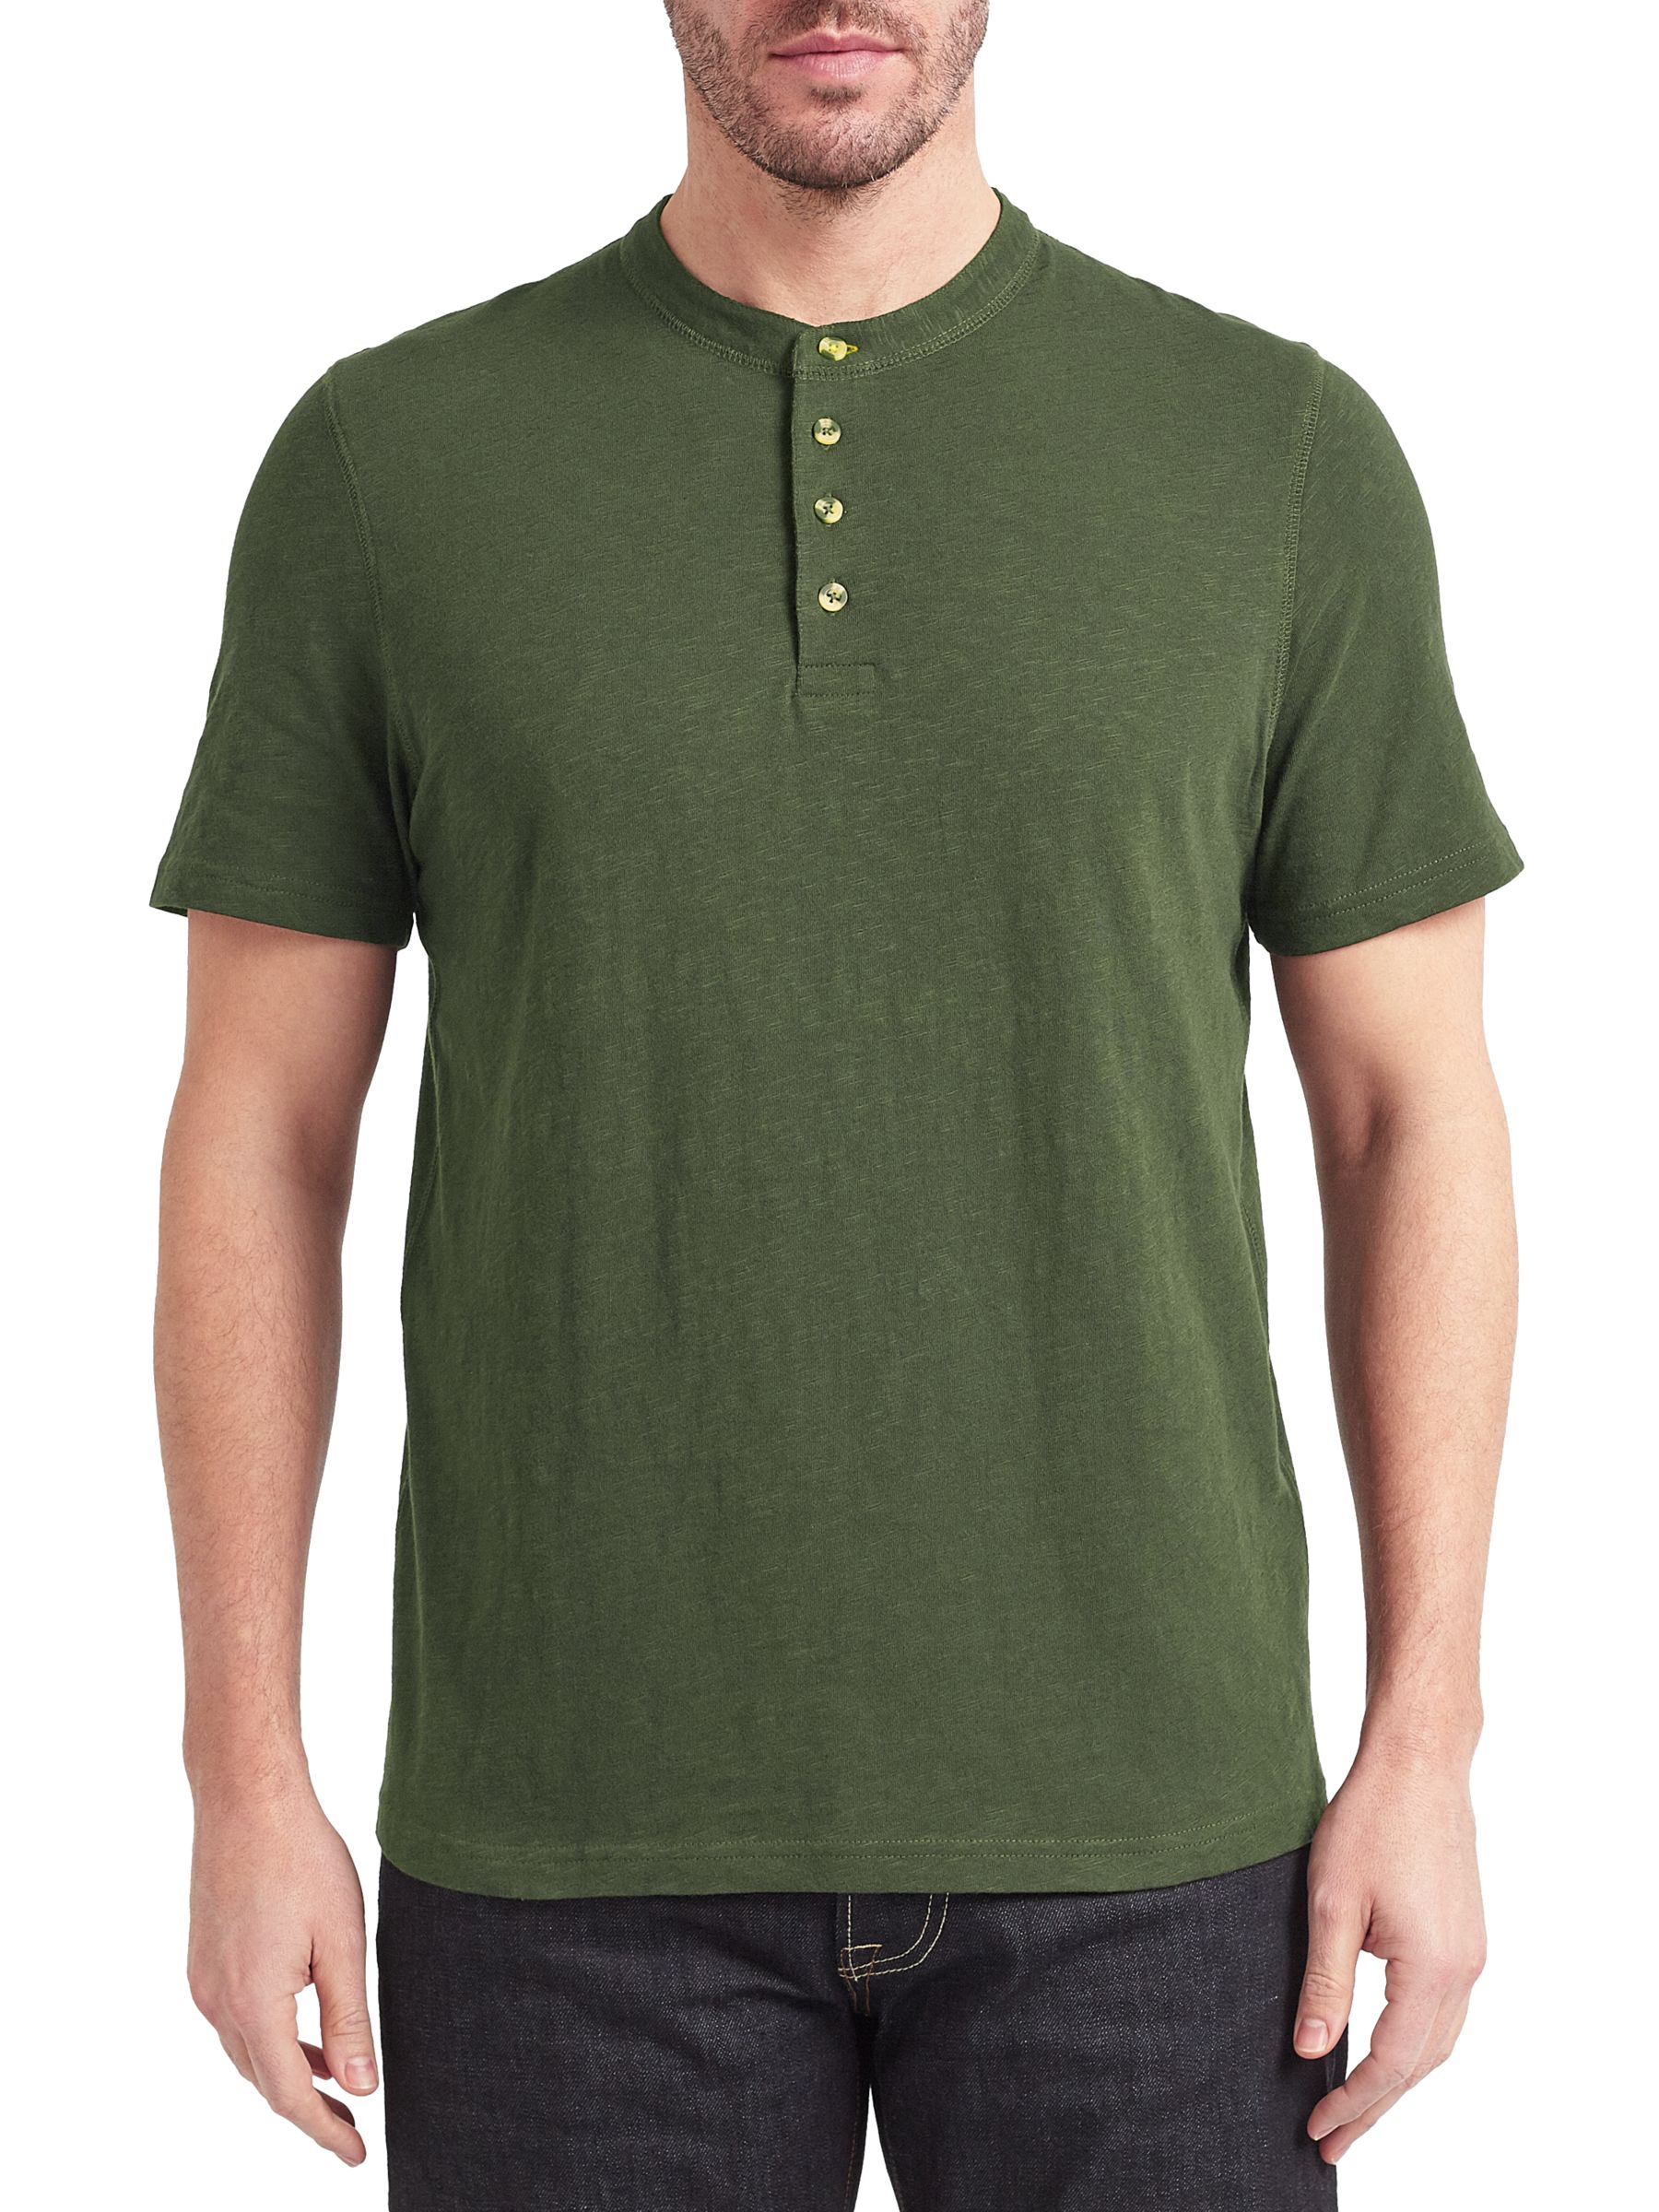 John Lewis Short Sleeve Henley T-Shirt at John Lewis & Partners